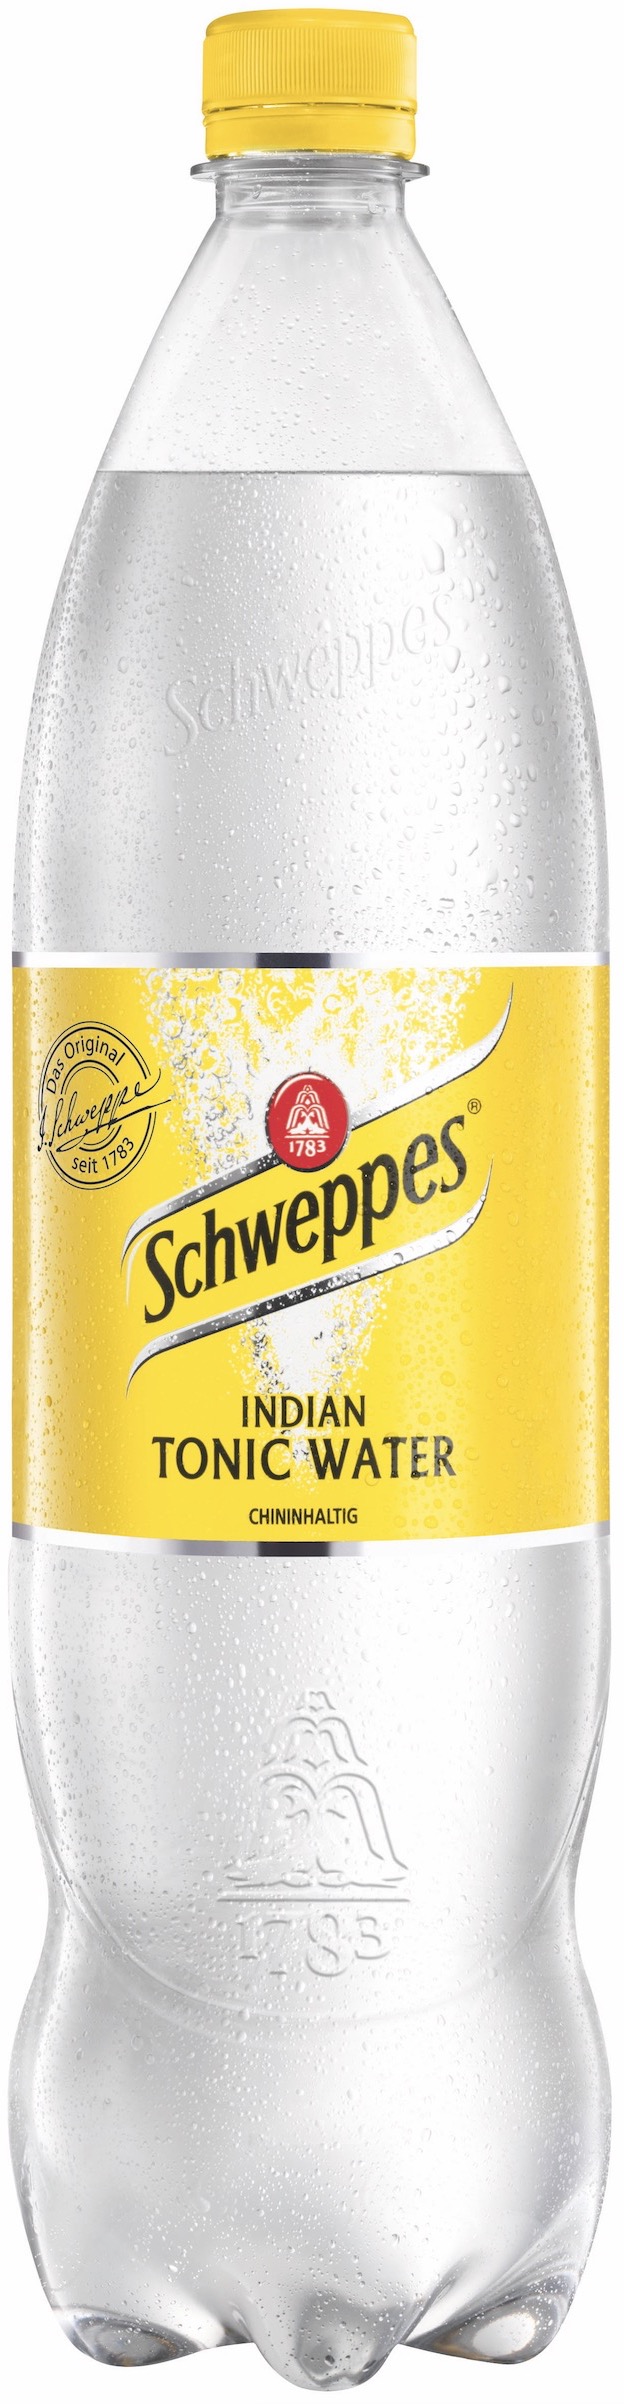 Schweppes Indian Tonic Water 1,25L EINWEG